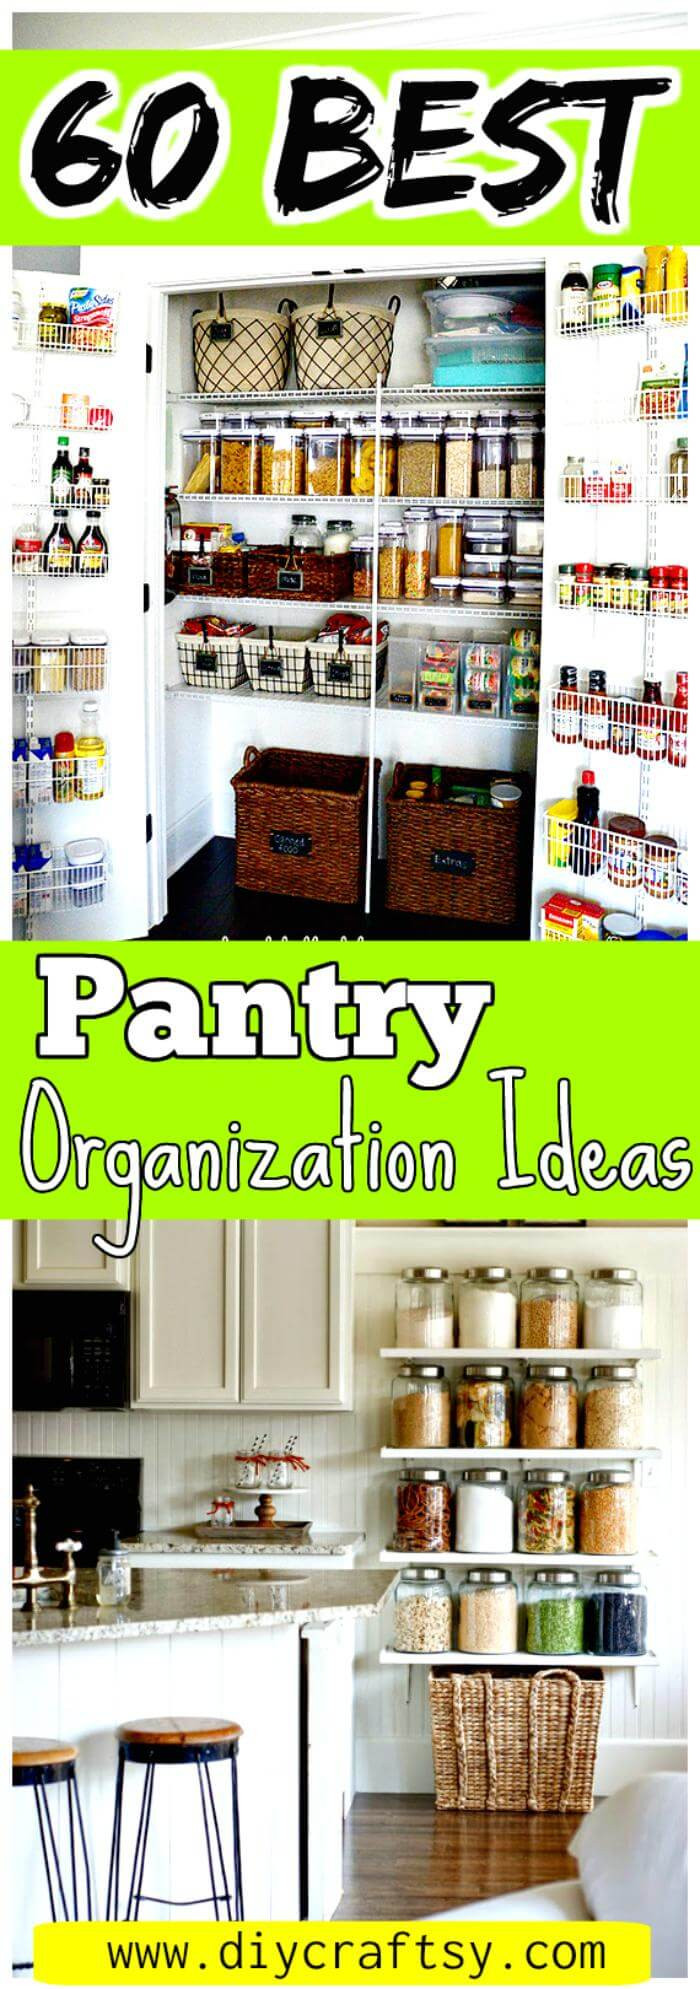 DIY Pantry Organizers
 60 Best Pantry Organization Ideas DIY Page 3 of 12